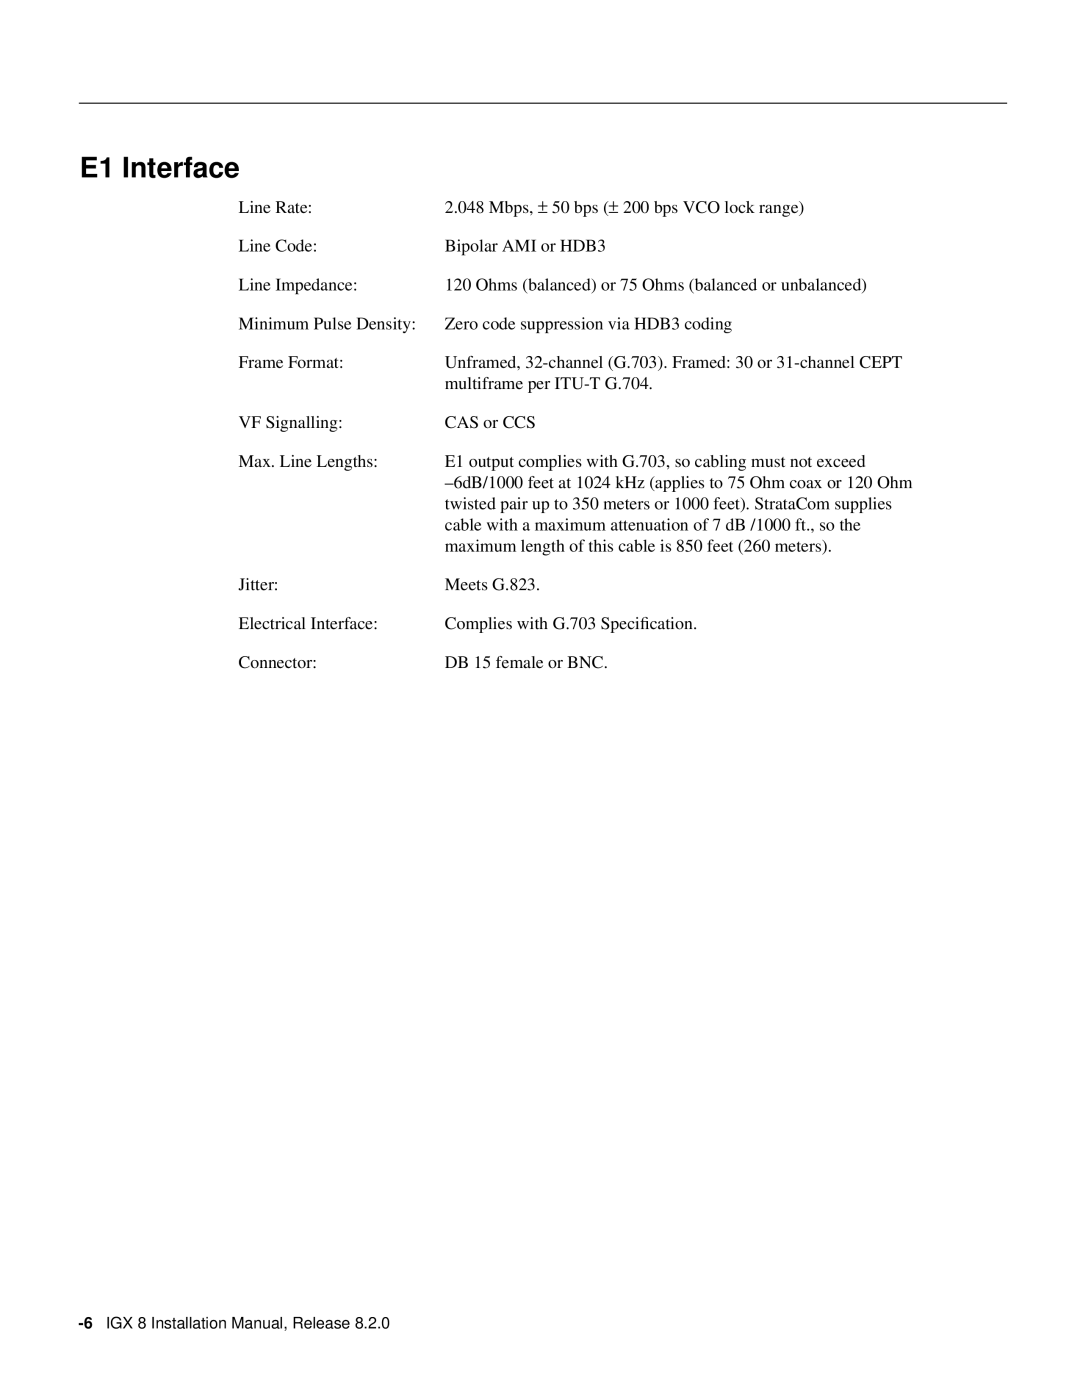 Cisco Systems appendix E1 Interface, IGX 8 Installation Manual, Release 